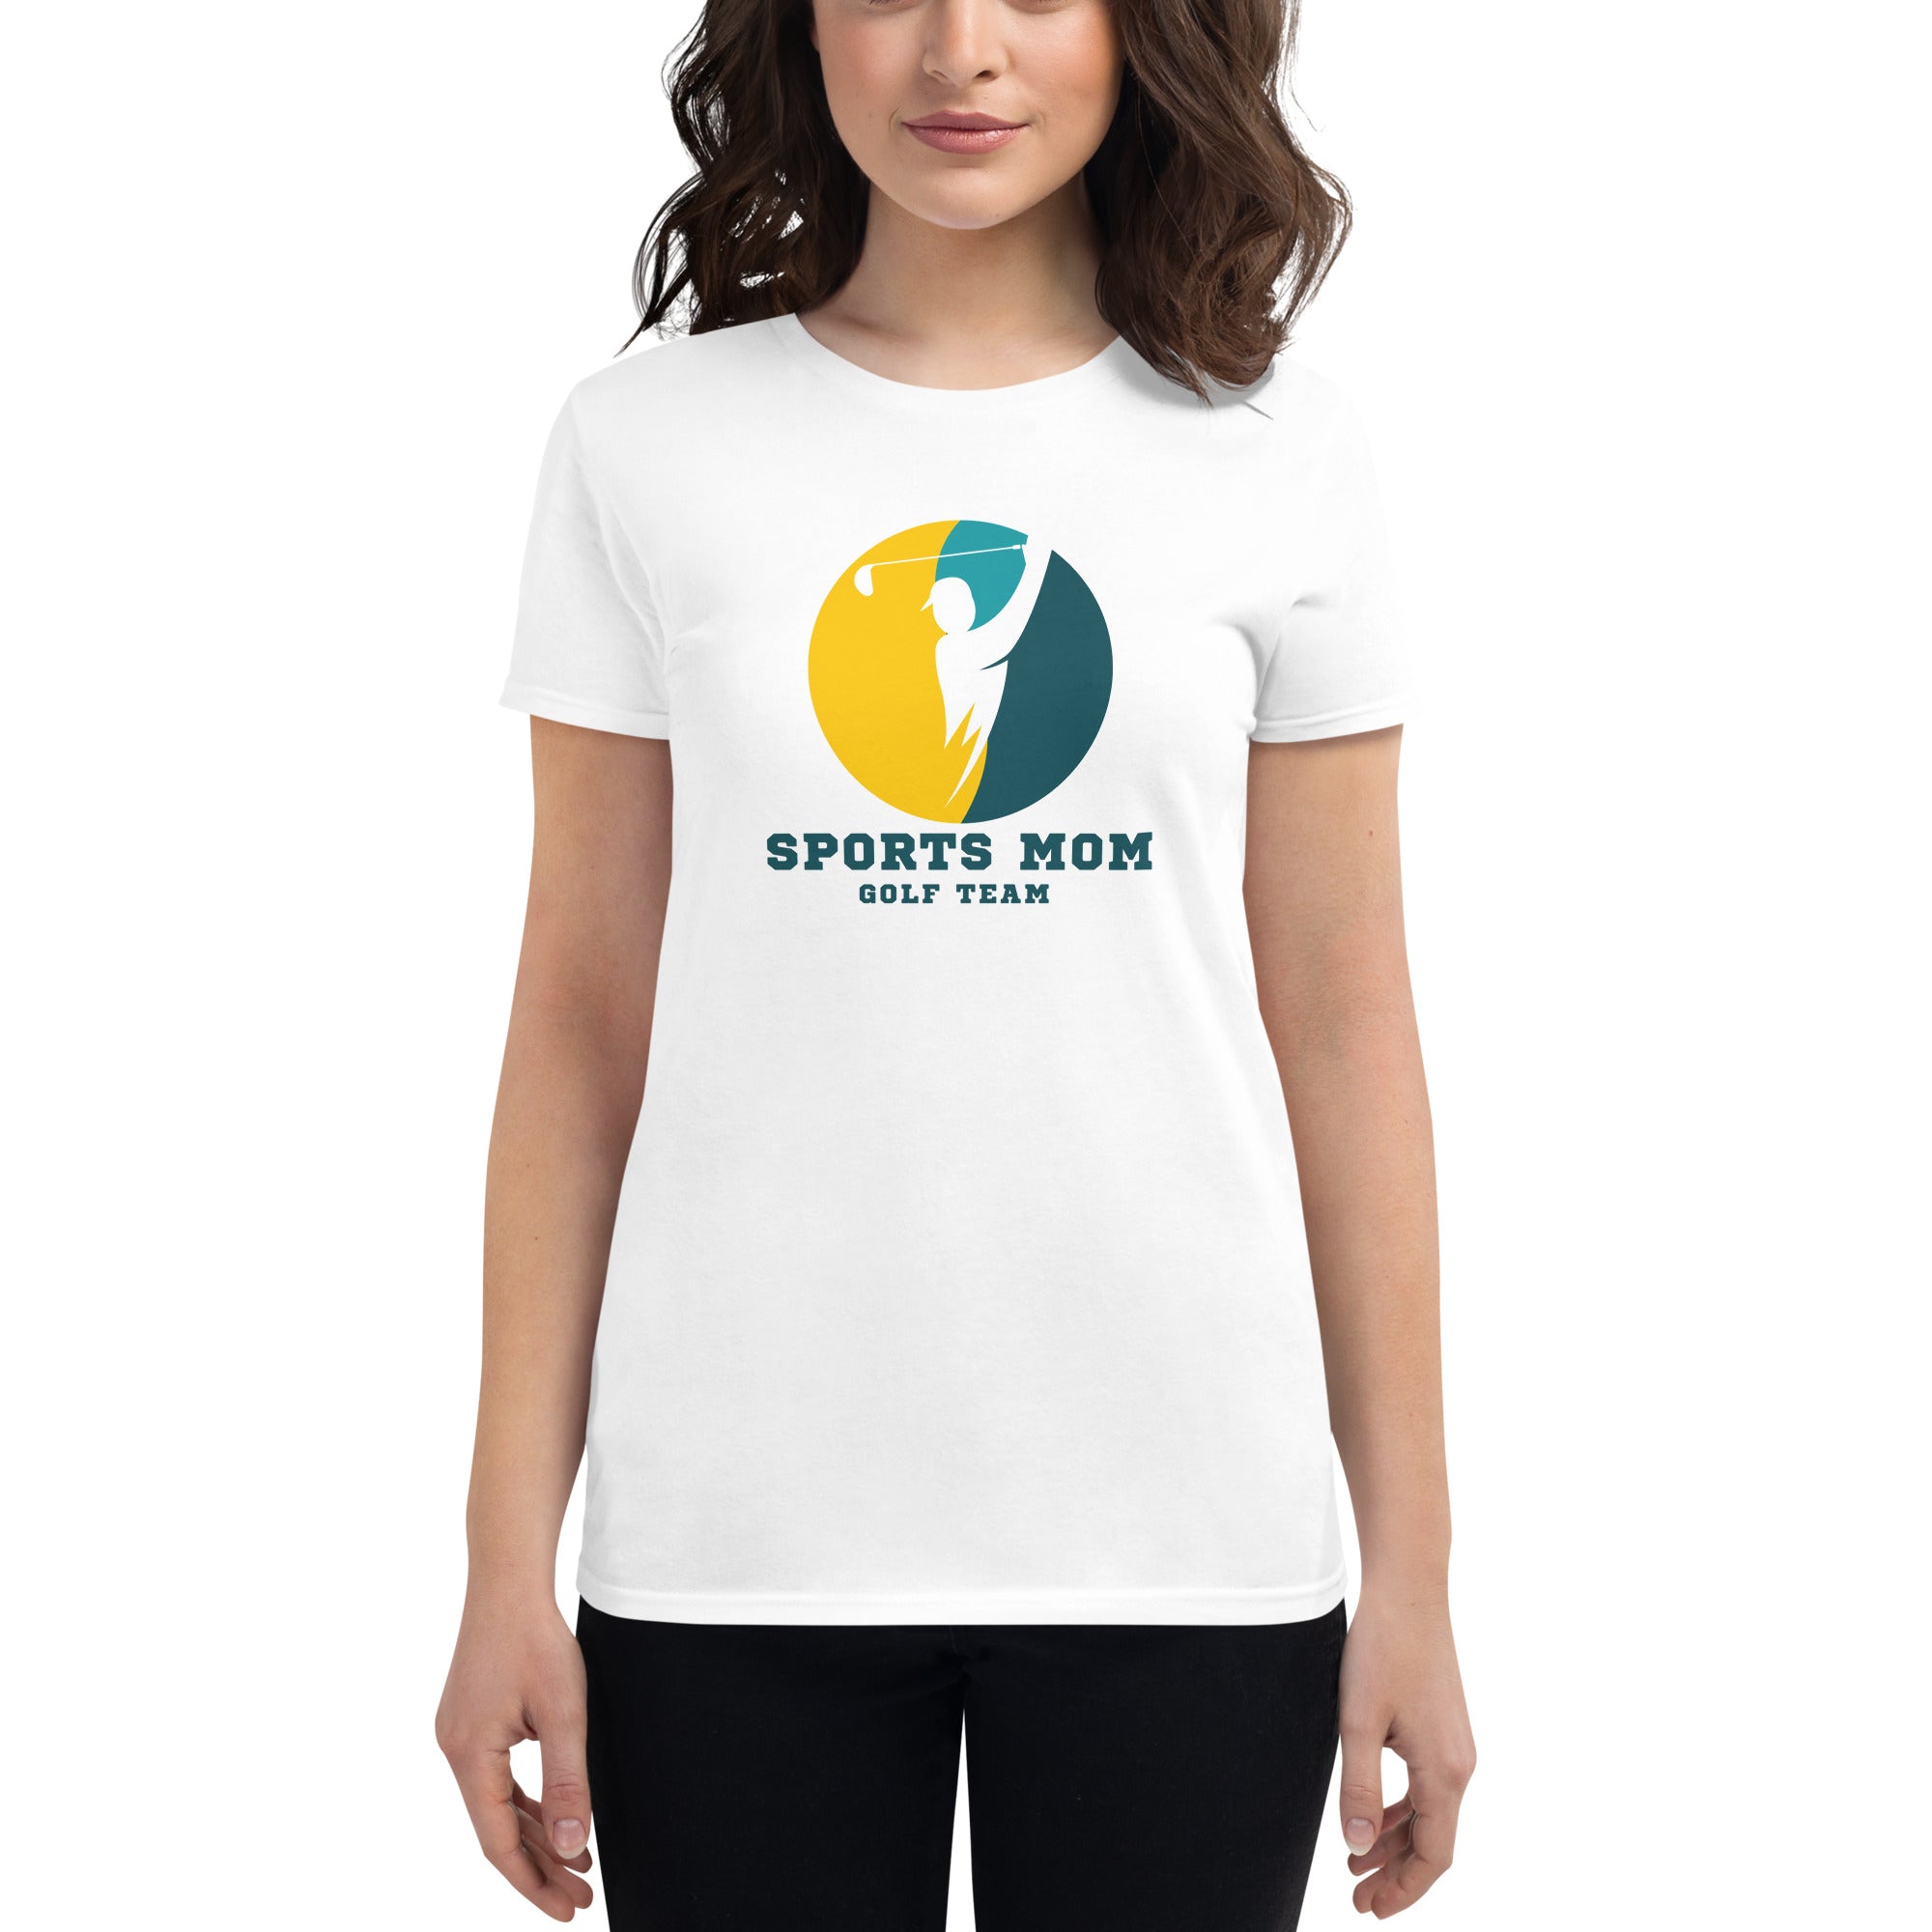 The Original Sports Mom Golf Team Women's Fitted T-Shirt